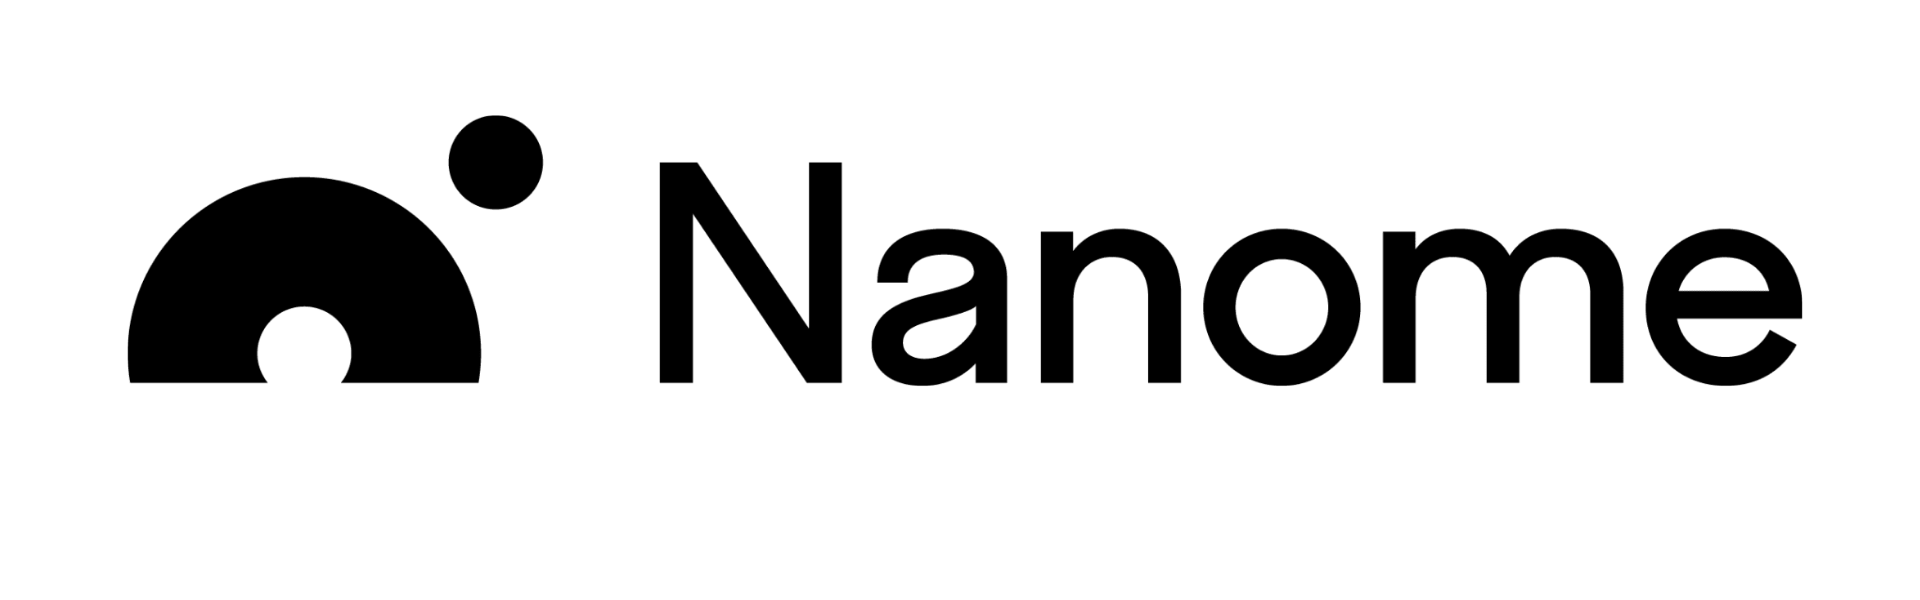 Nanome Logo (1)